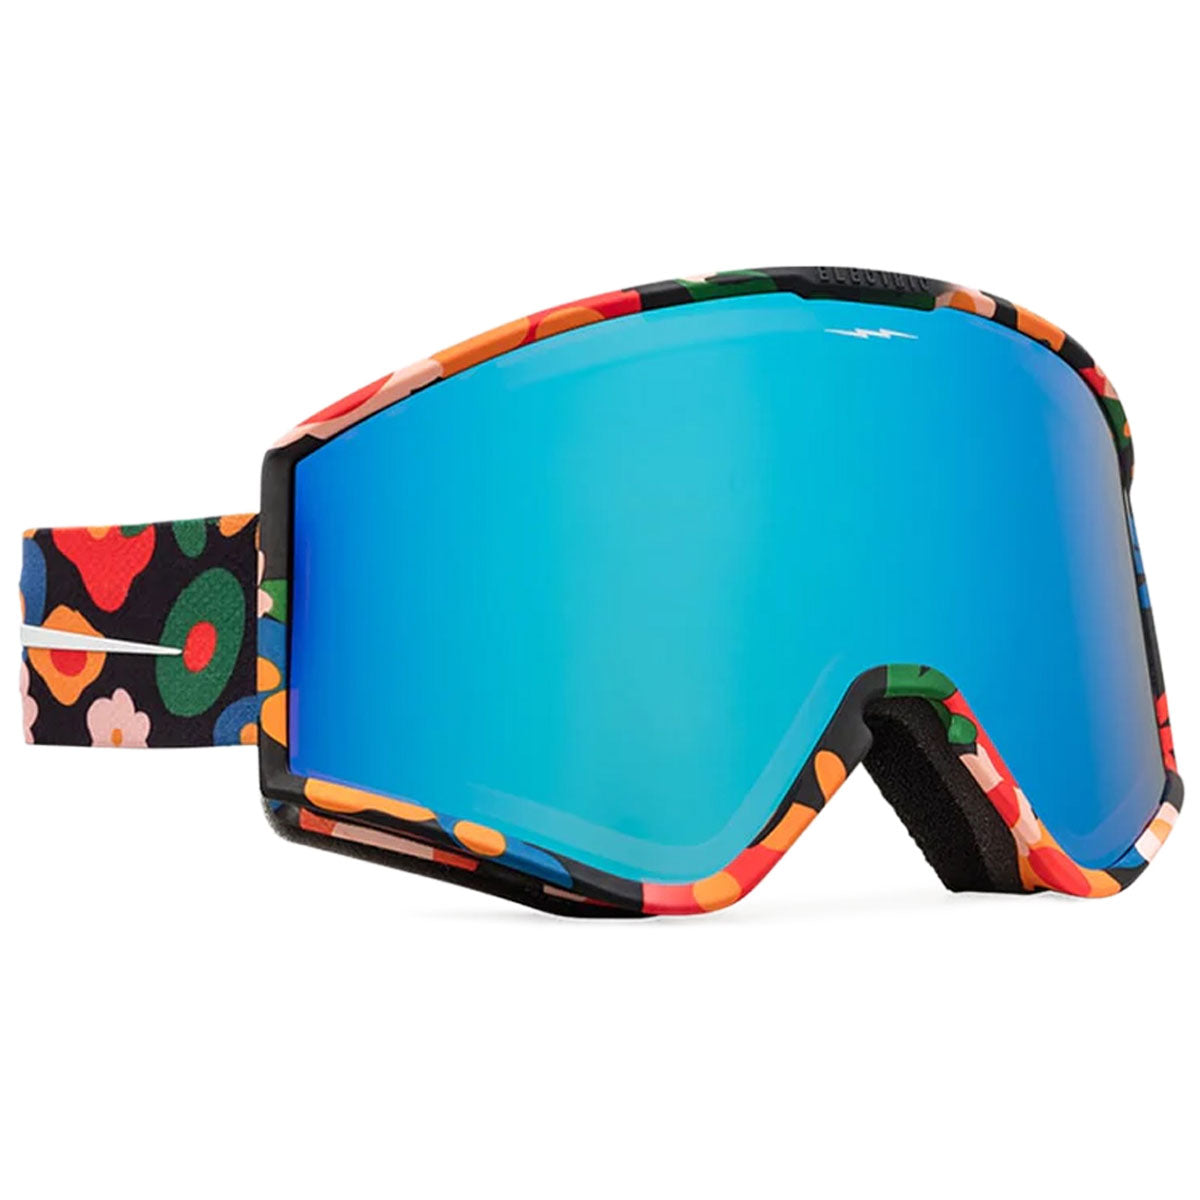 Electric Kleveland Snowboard Goggles - Blossom/Blue Chrome image 1